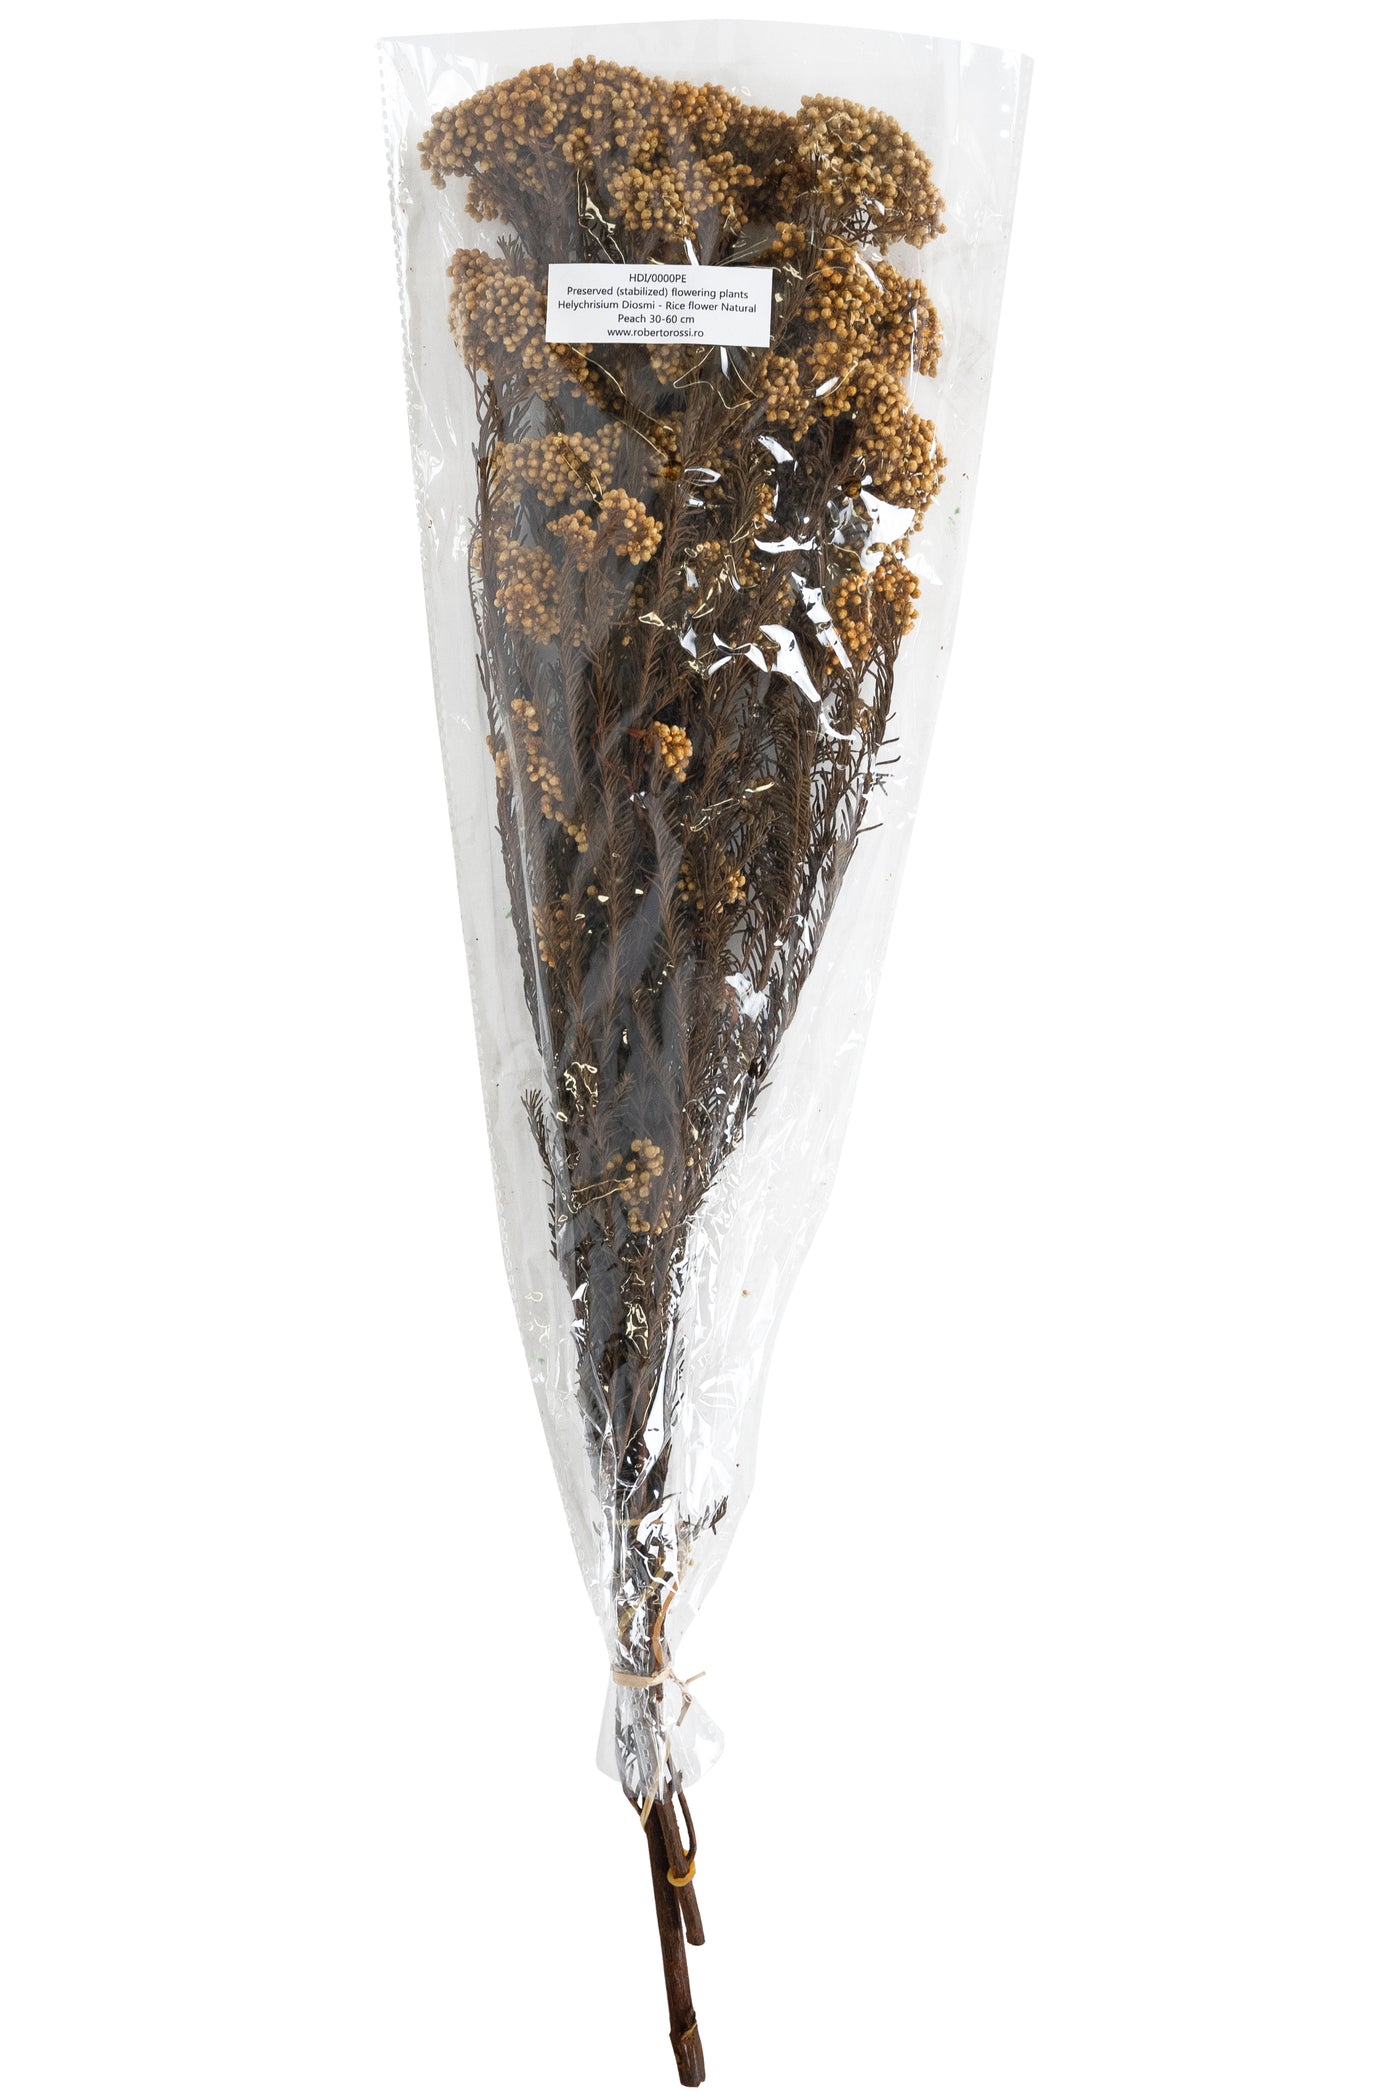 Crenguta conservata de Helychrisium diosmi H60-70 cm. piersica